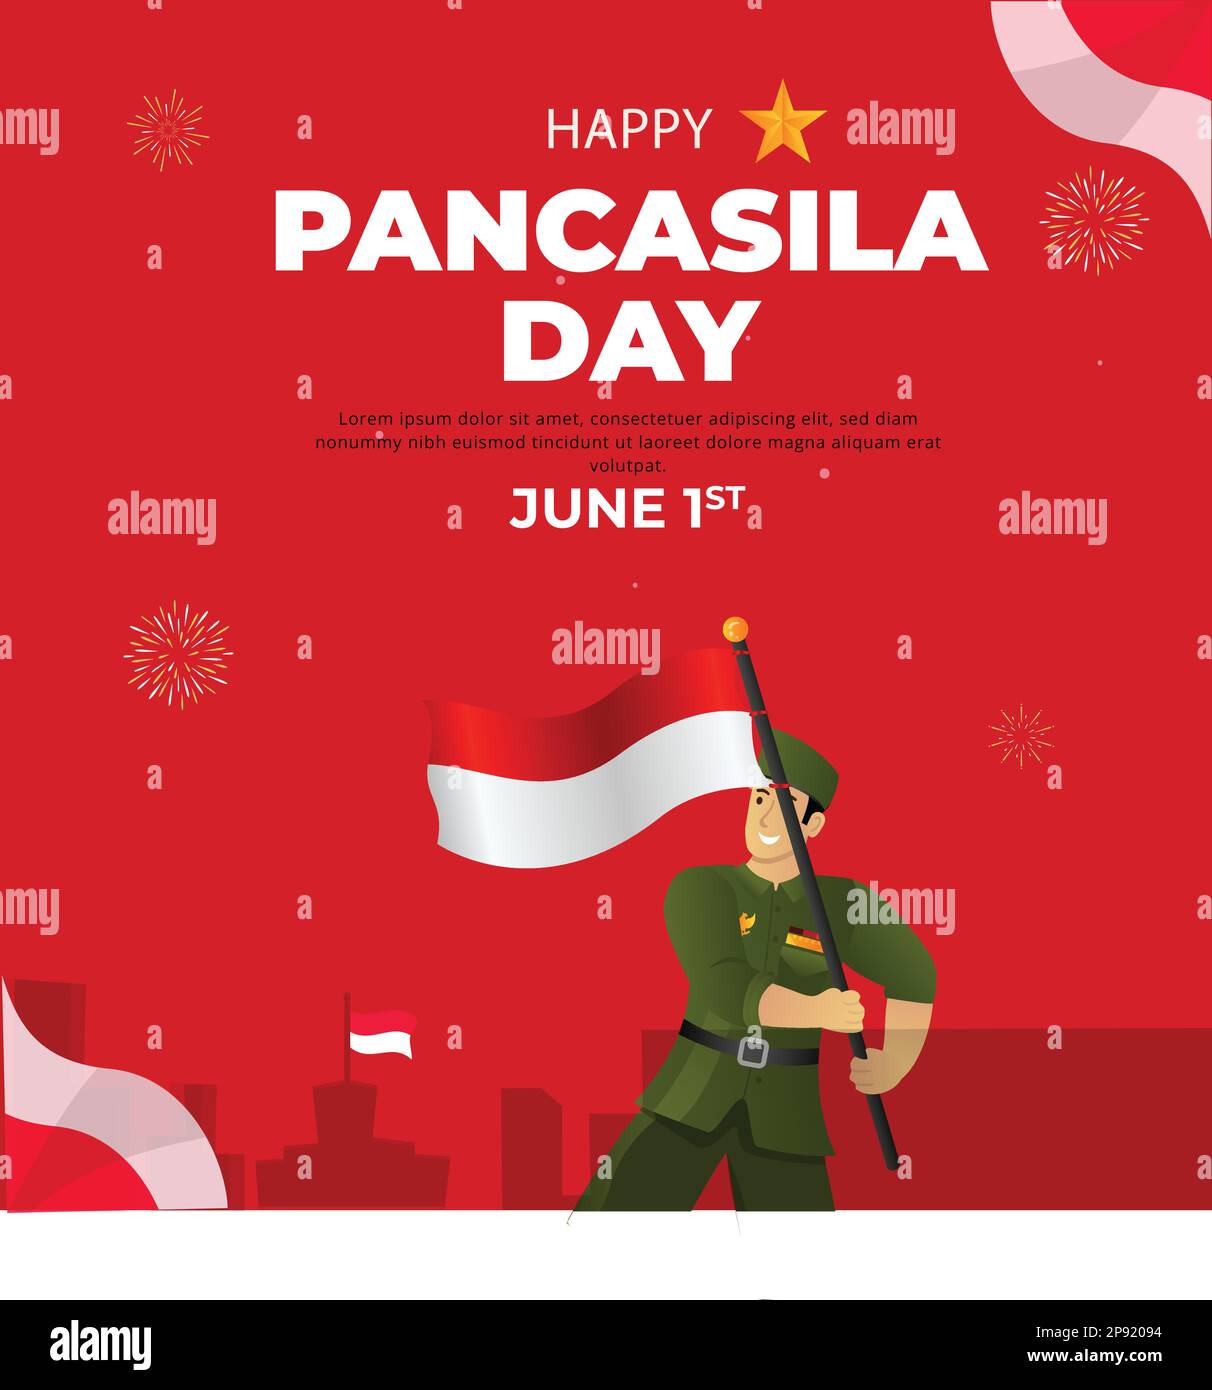 indonesia Independence Day 17 agosto Pancasila Day Illustrazione Vettoriale